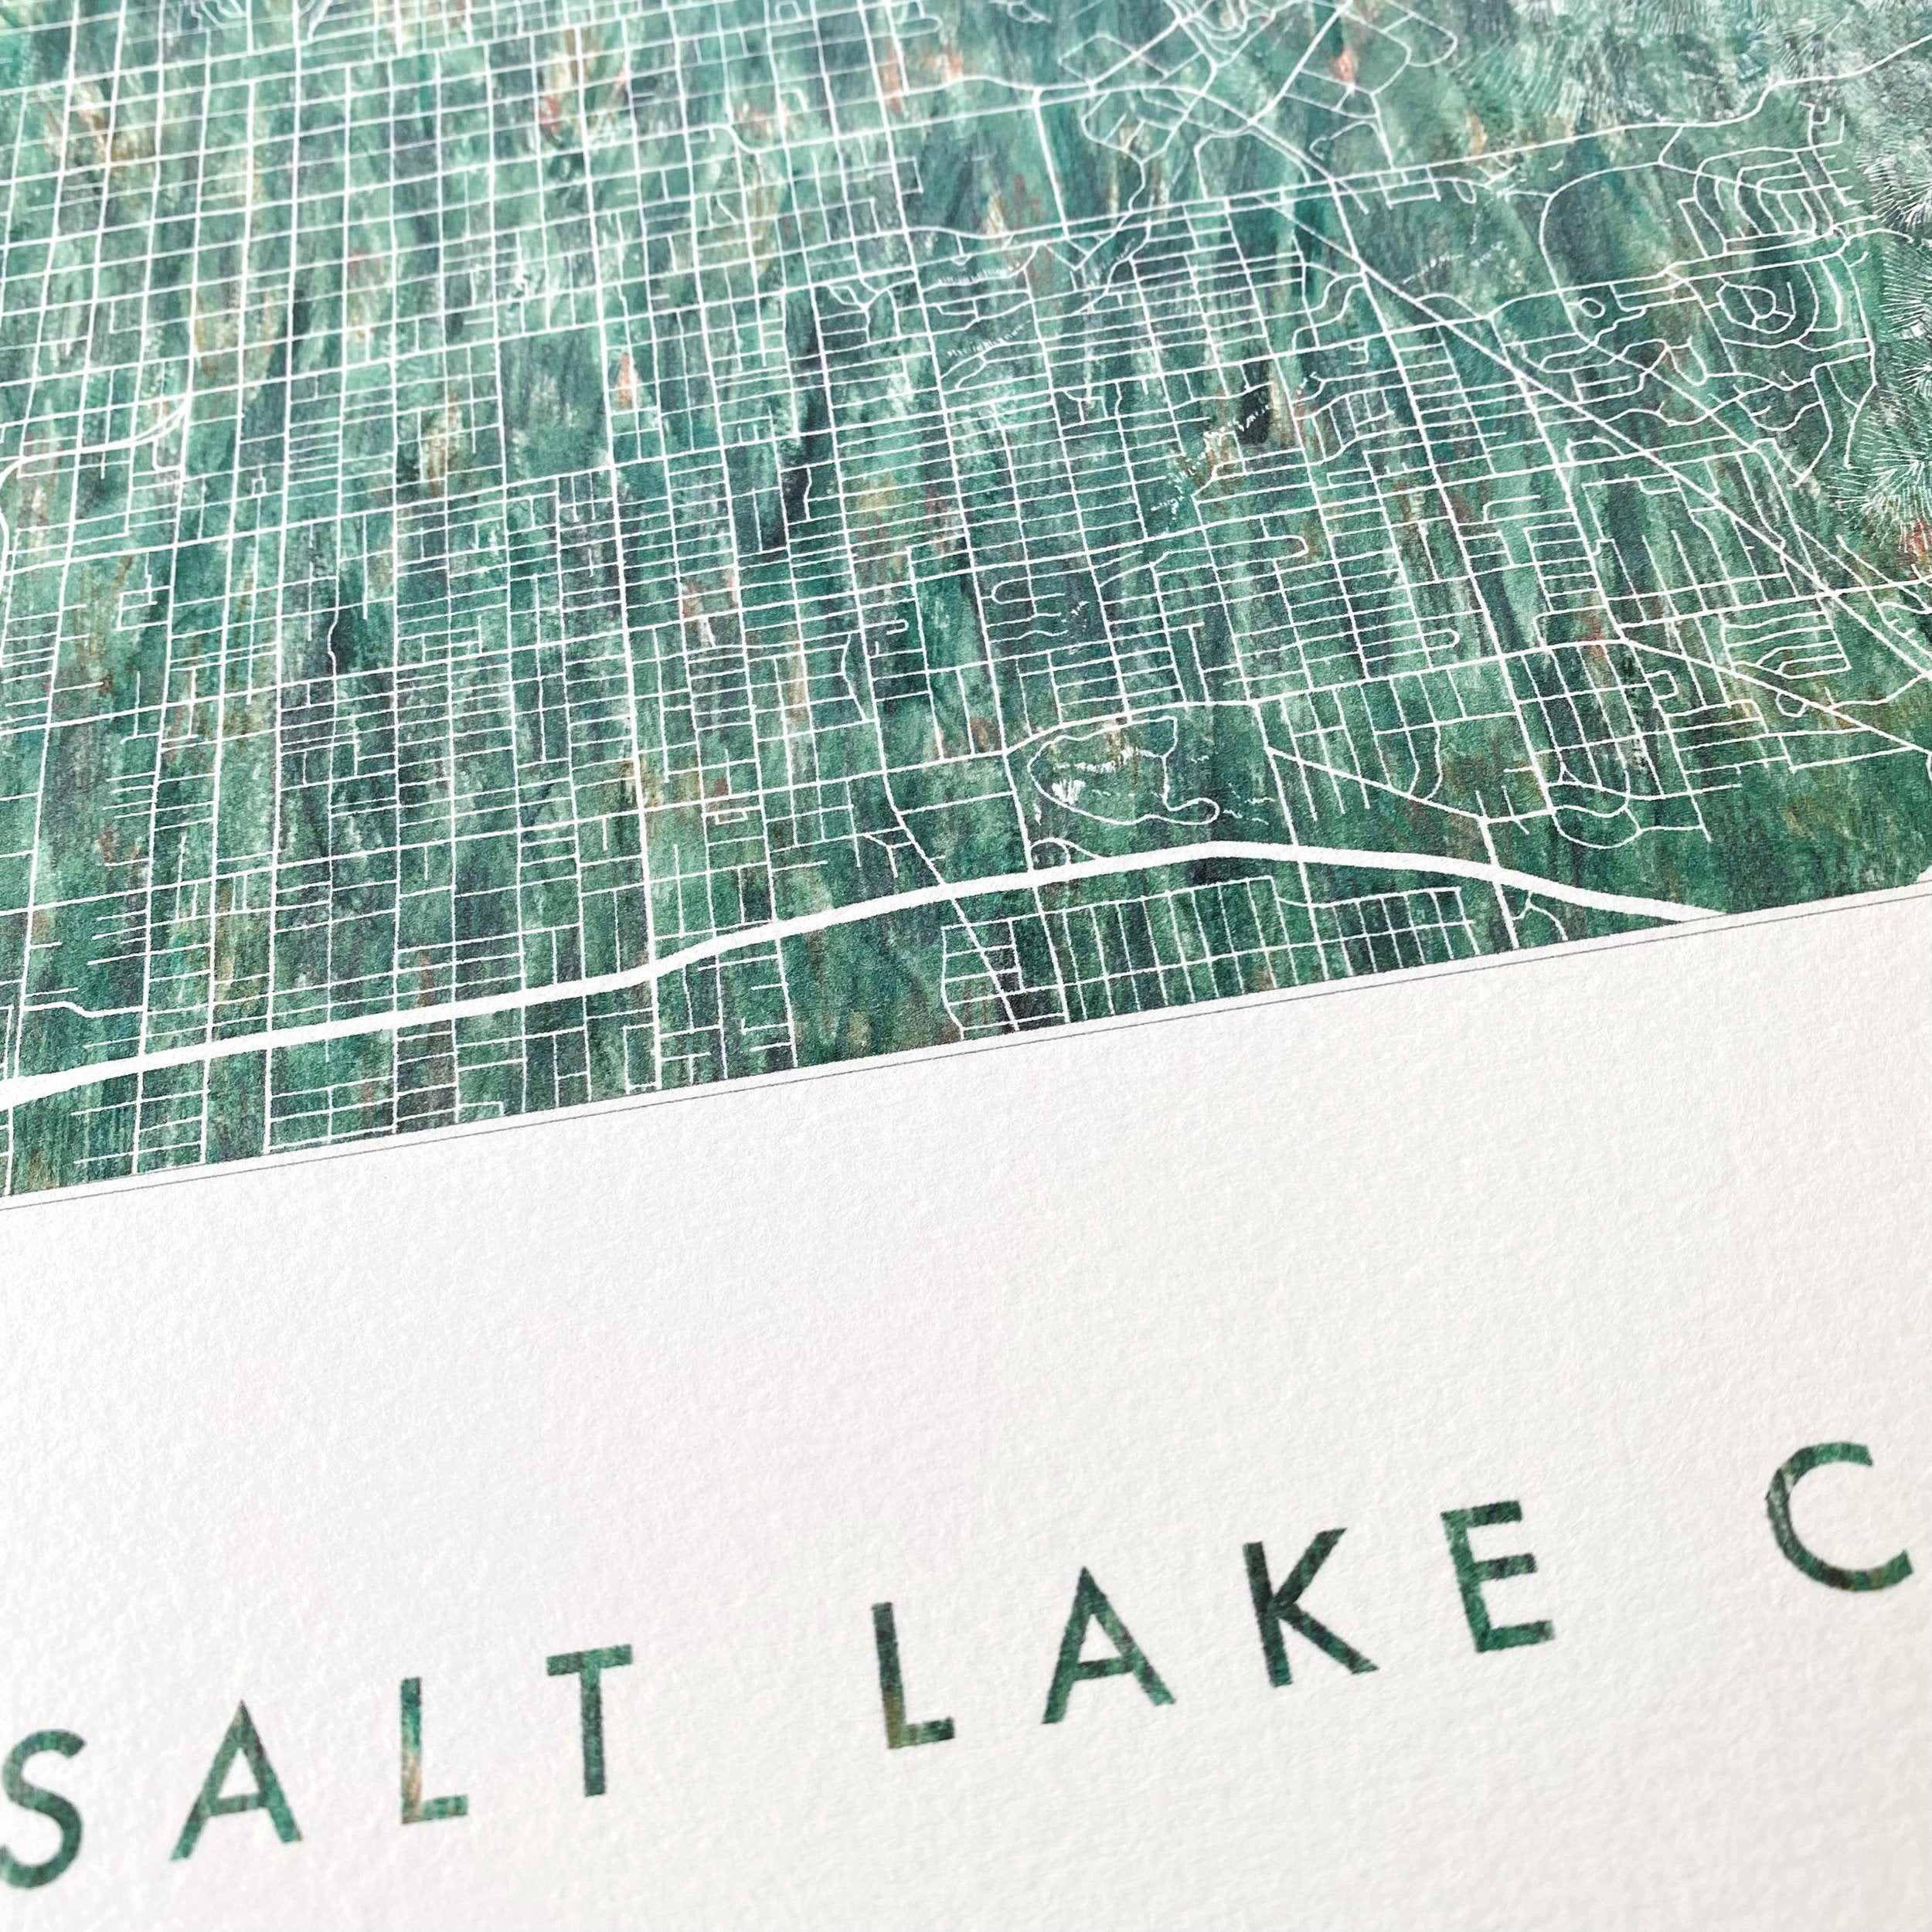 SALT LAKE CITY Urban Fabrics City Map: PRINT